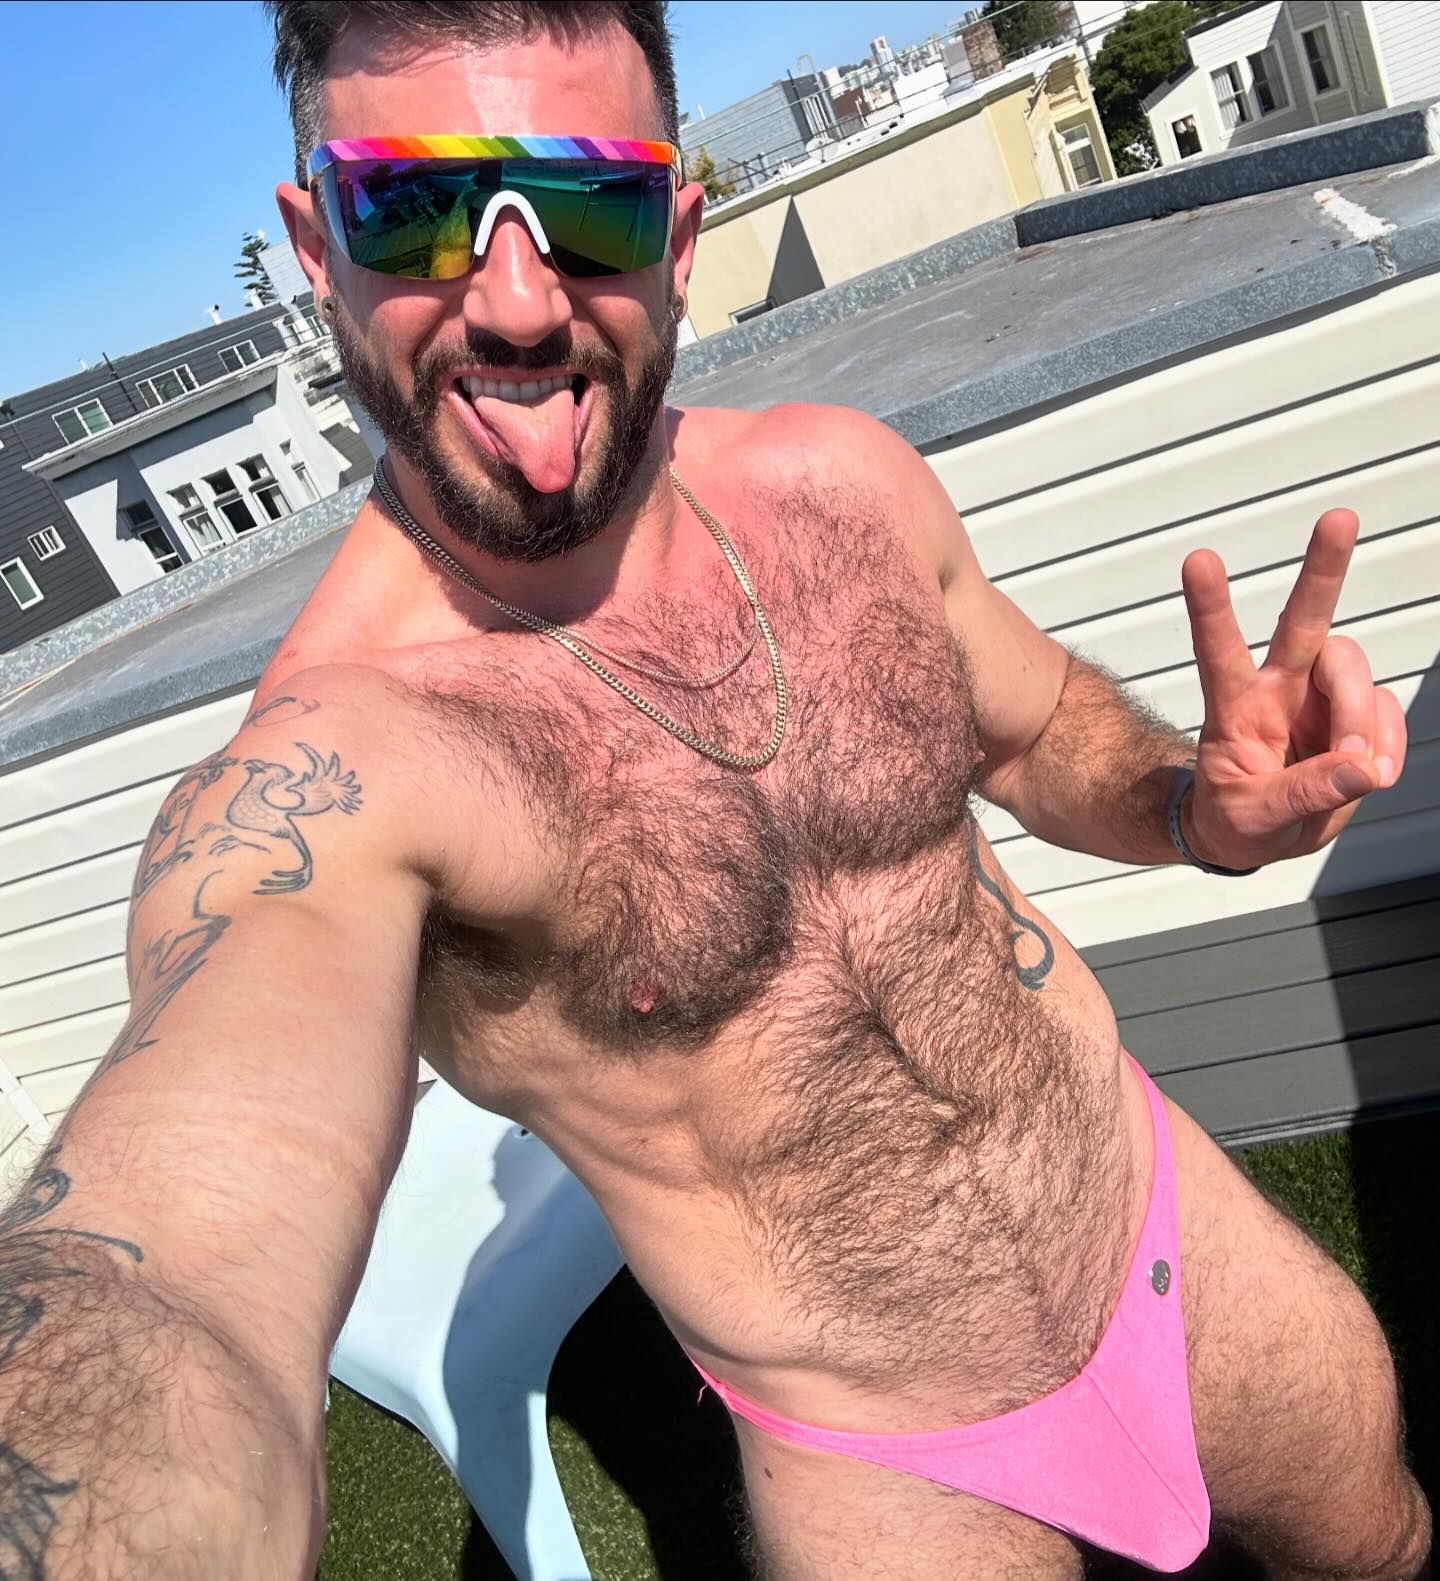 Feeling colorful! 🌈 

.

.

.

.

.

.

.

.

#beachsexy #hairyjock #musclejock #hairygaymen #hairymusclegay #hairymusclejock #hairymuscle #hairymusclemen #hairymuscles #furrybuddy
#poolgay #pooldays